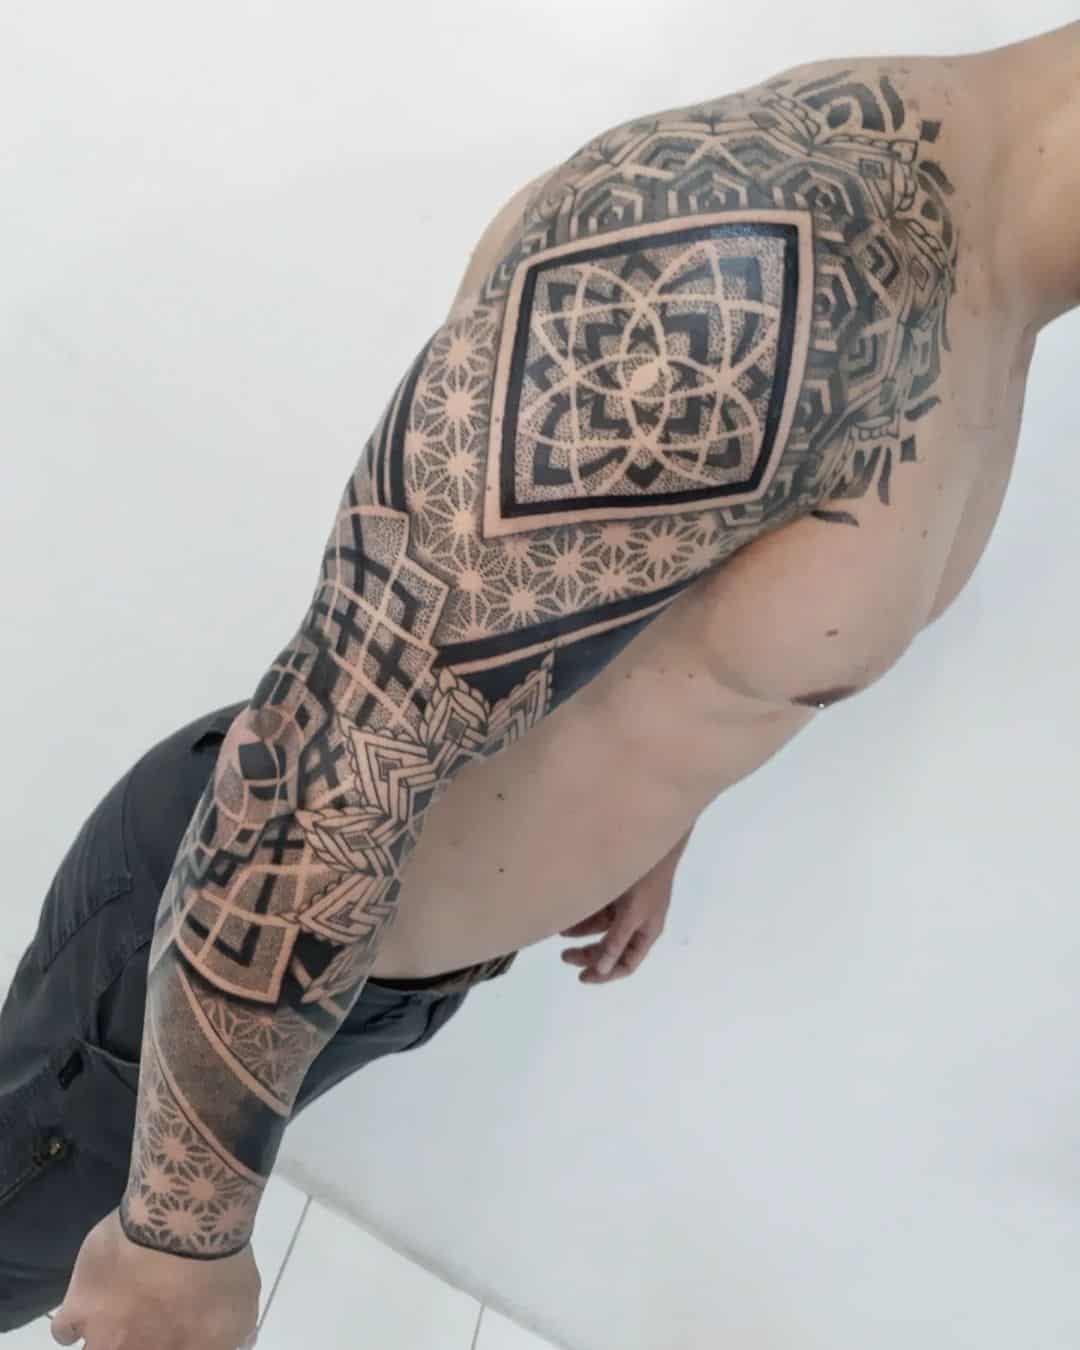 Dotwork on shoulder tattoo by pontilhismo.tattoo.sr .geleia